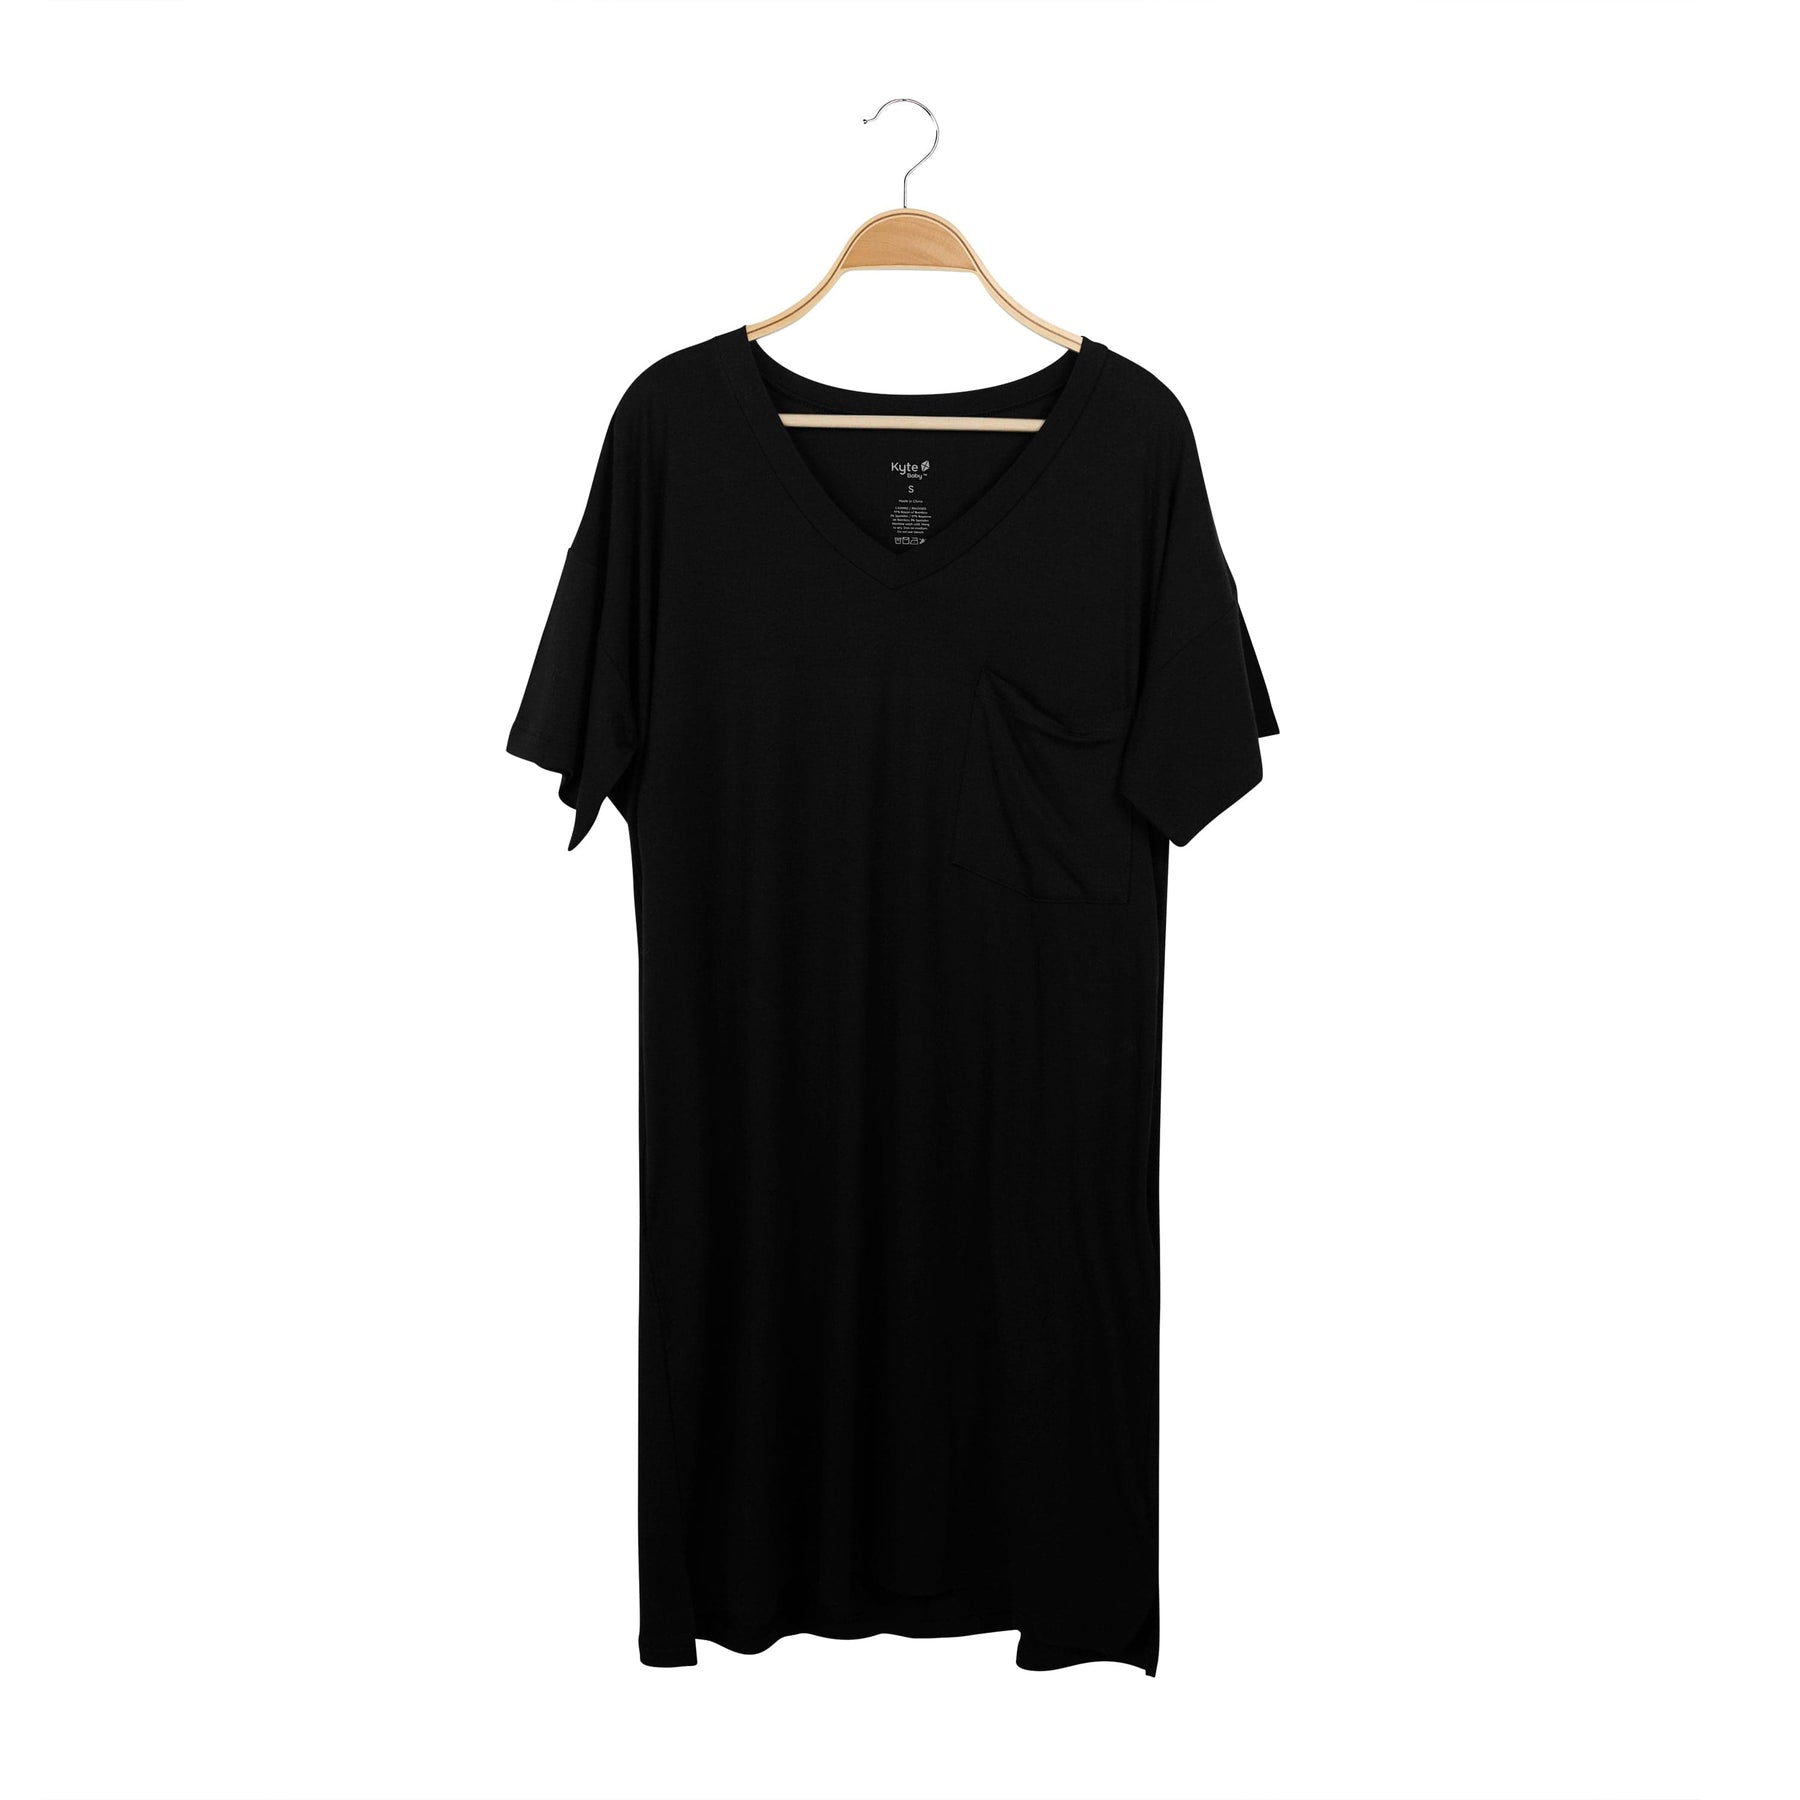 Kyte Baby Adult T-Shirt Dress Women's T-Shirt Dress in Midnight